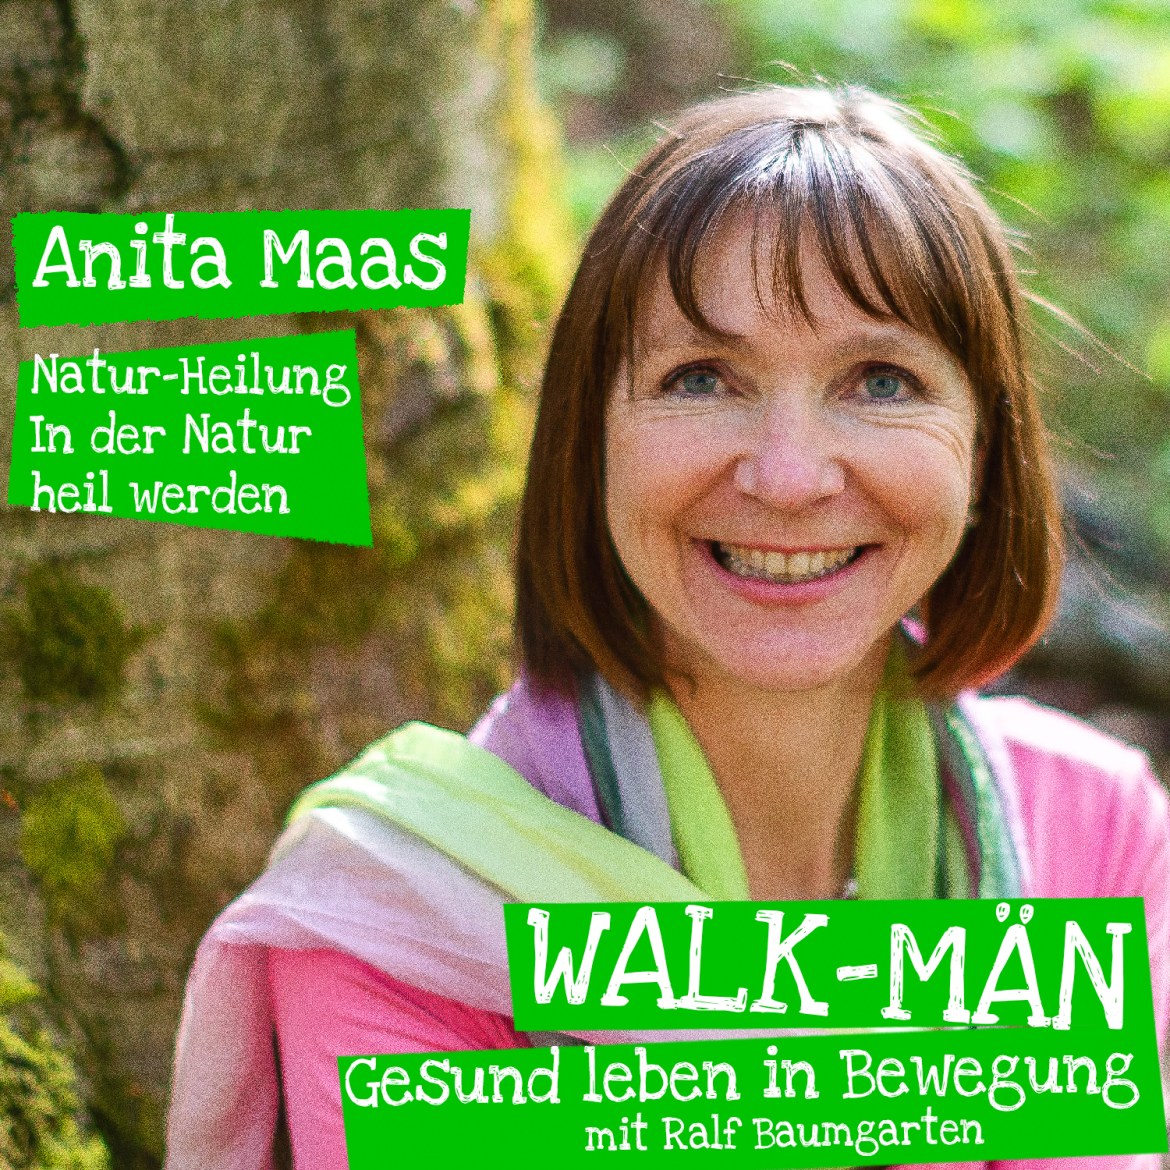 Anita Maas – Natur-Coaching und Schamanismus